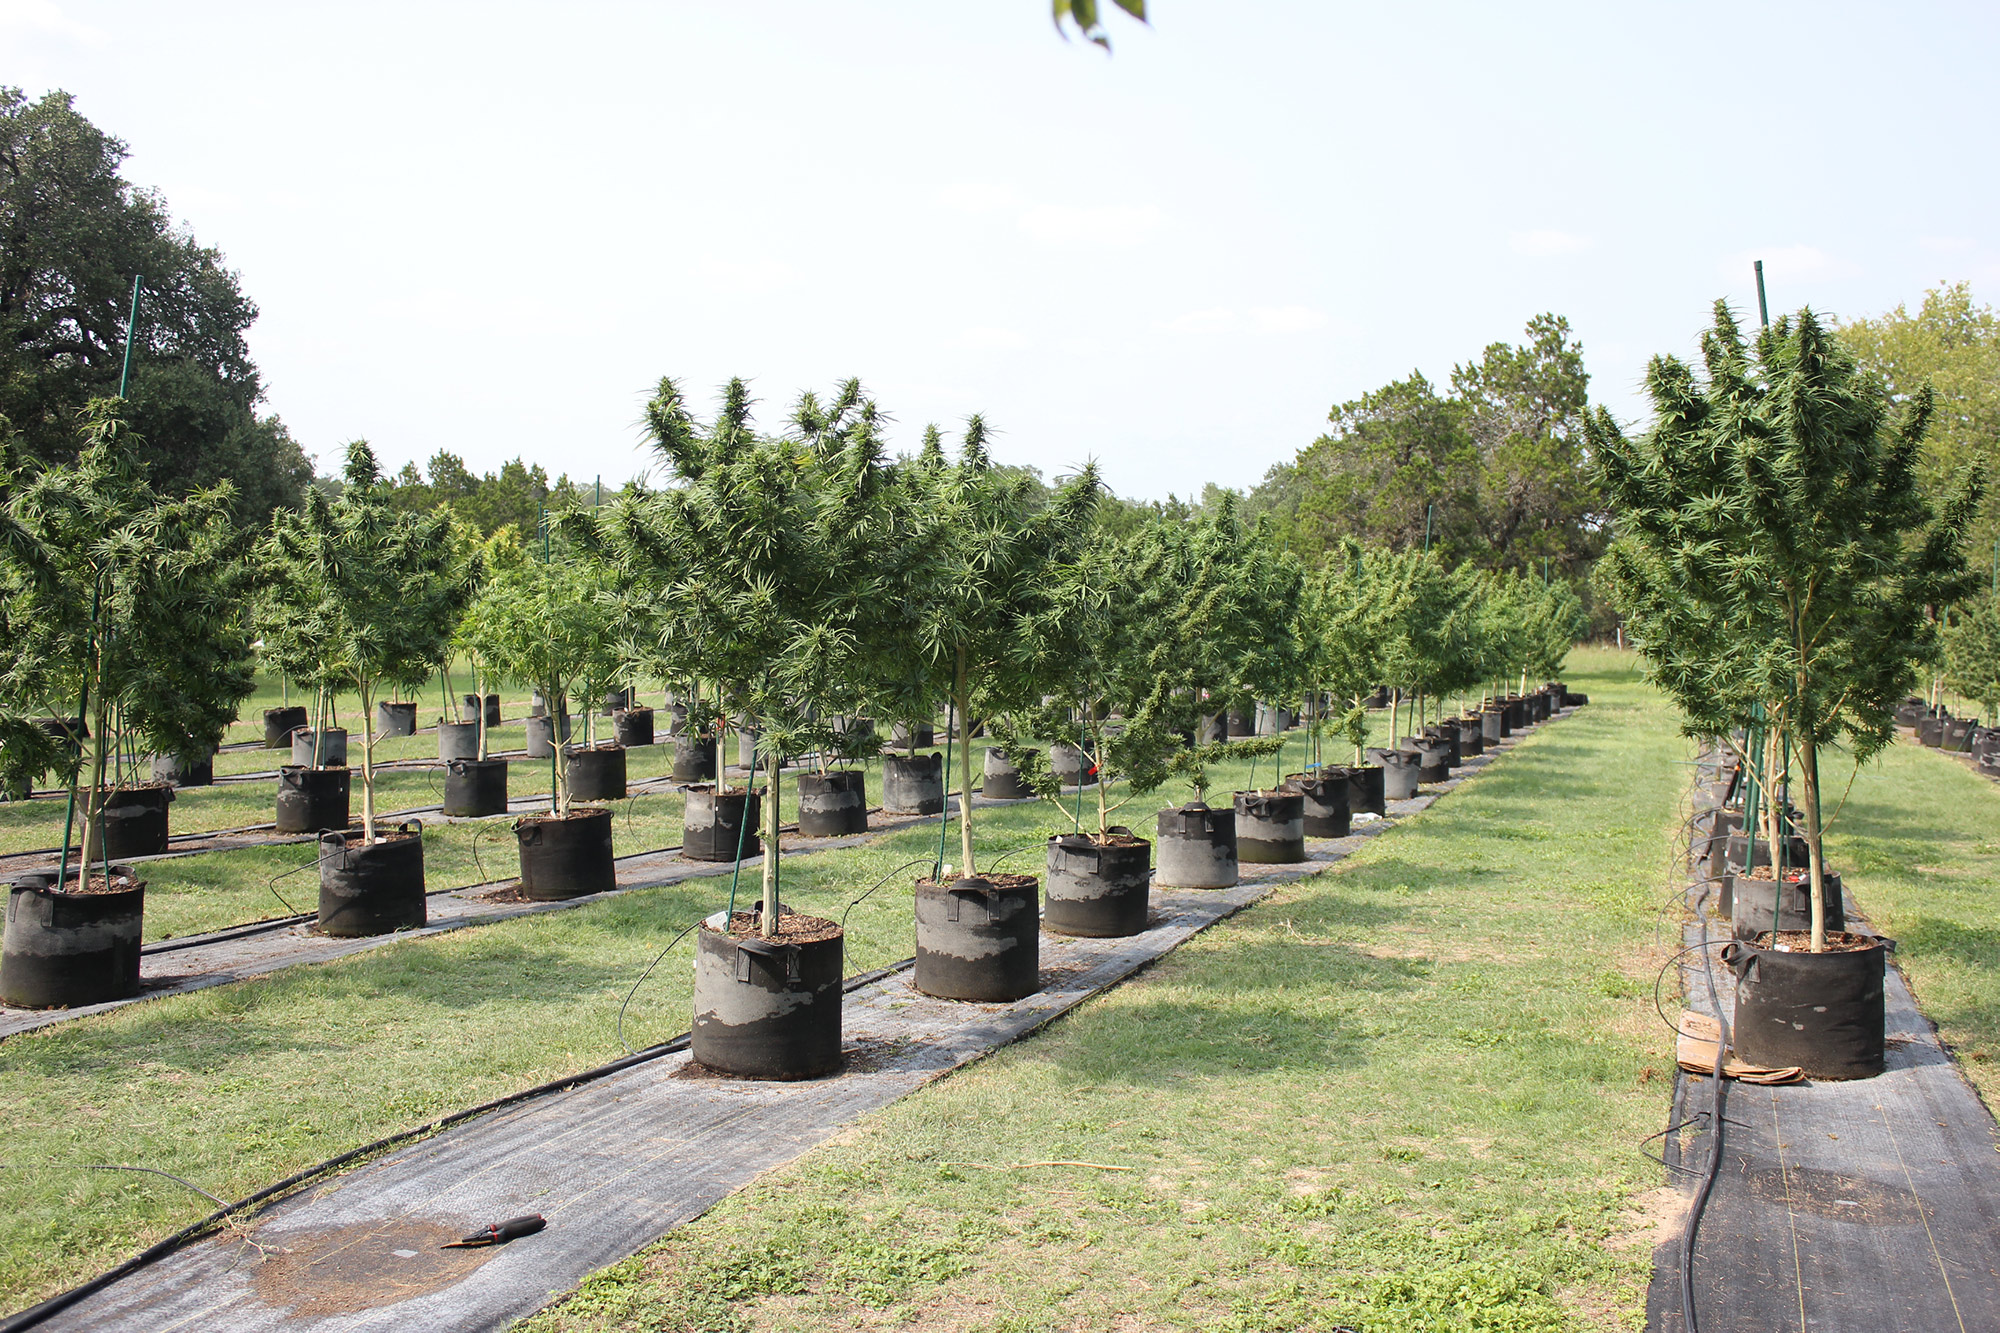 Rows of hemp plants at Texas First Hemp